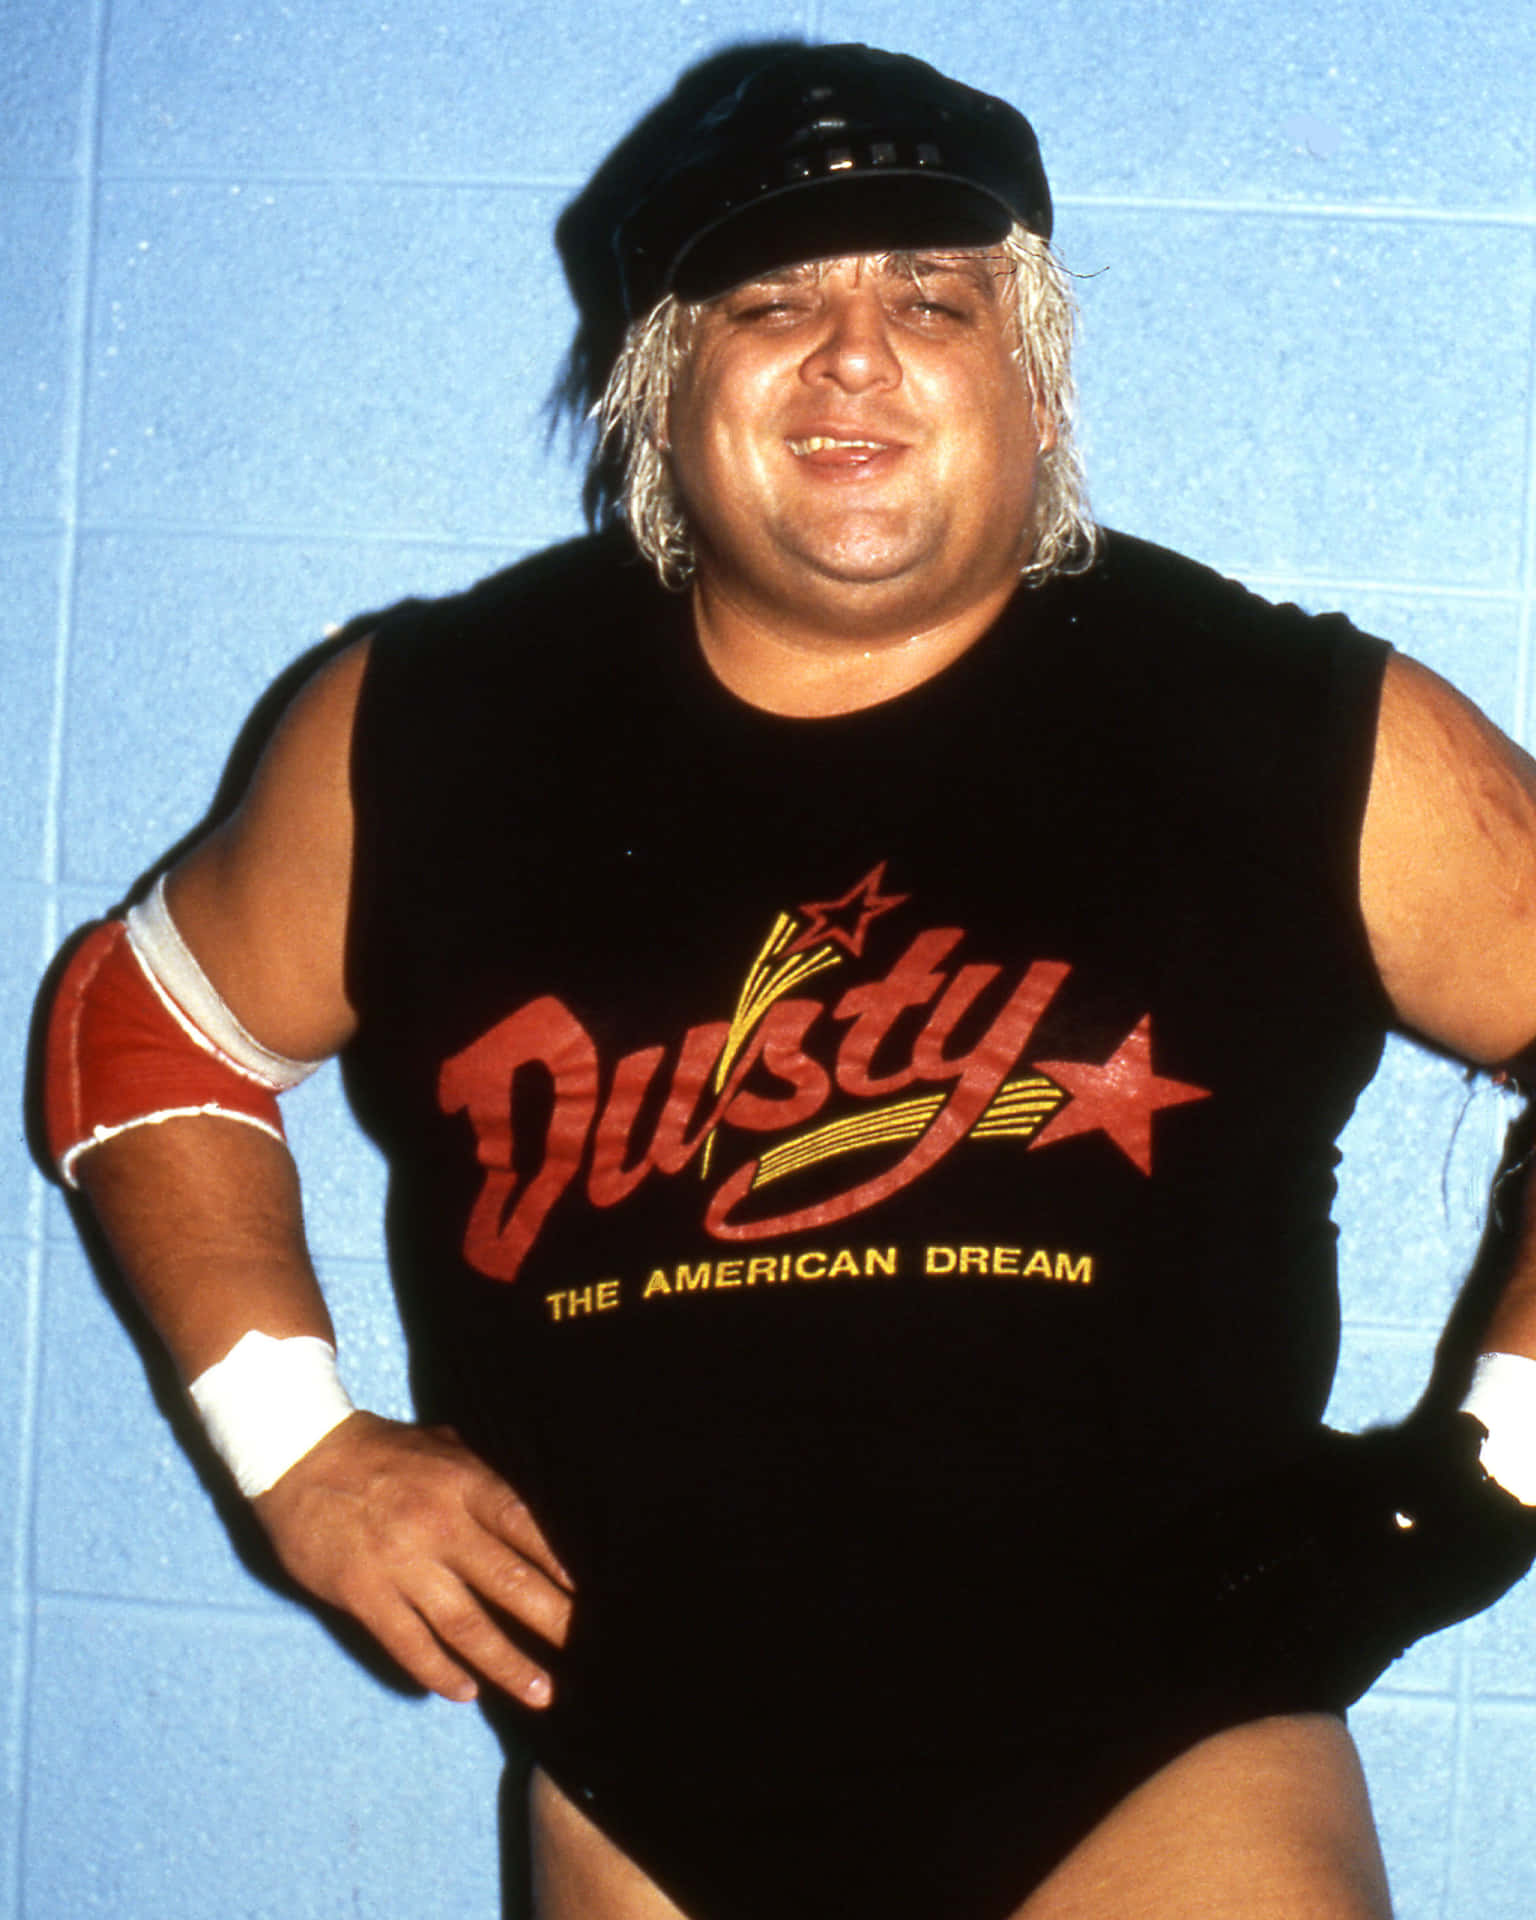 Vintage Dusty Rhodes Wrestler Portrait Wallpaper